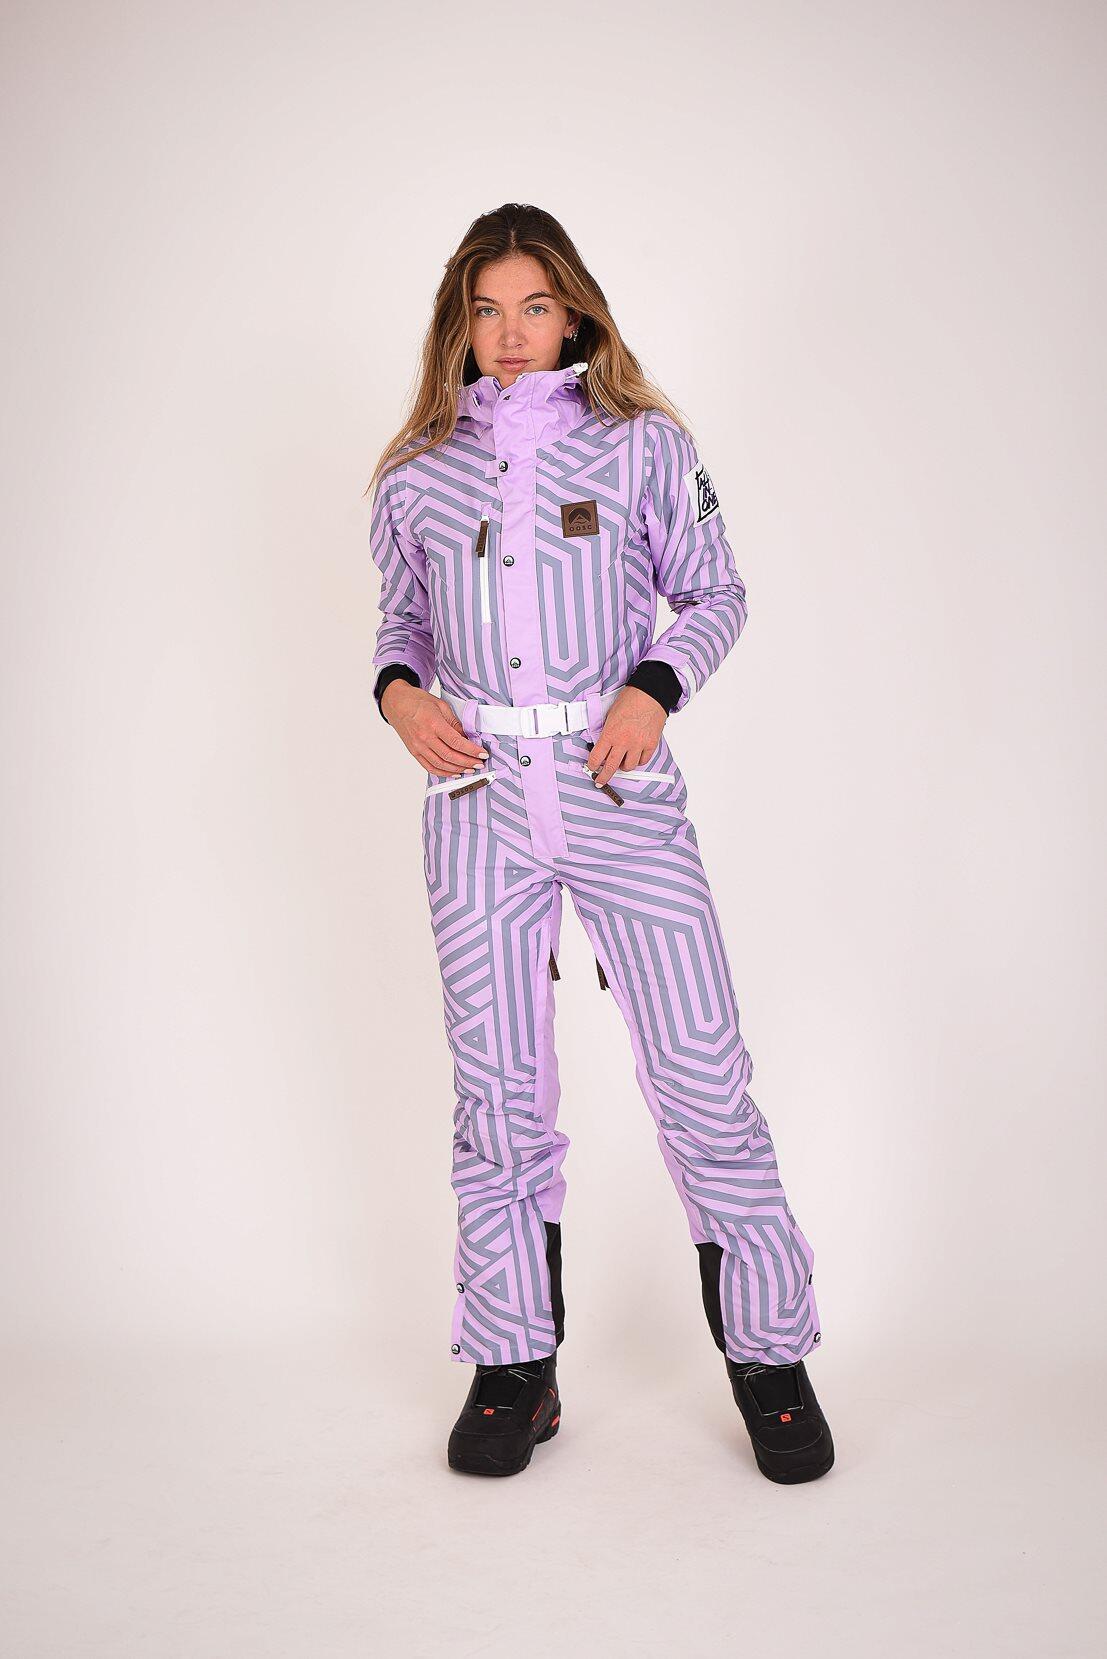 Fall Line Purple & Grey Female Ski Suit 1/5